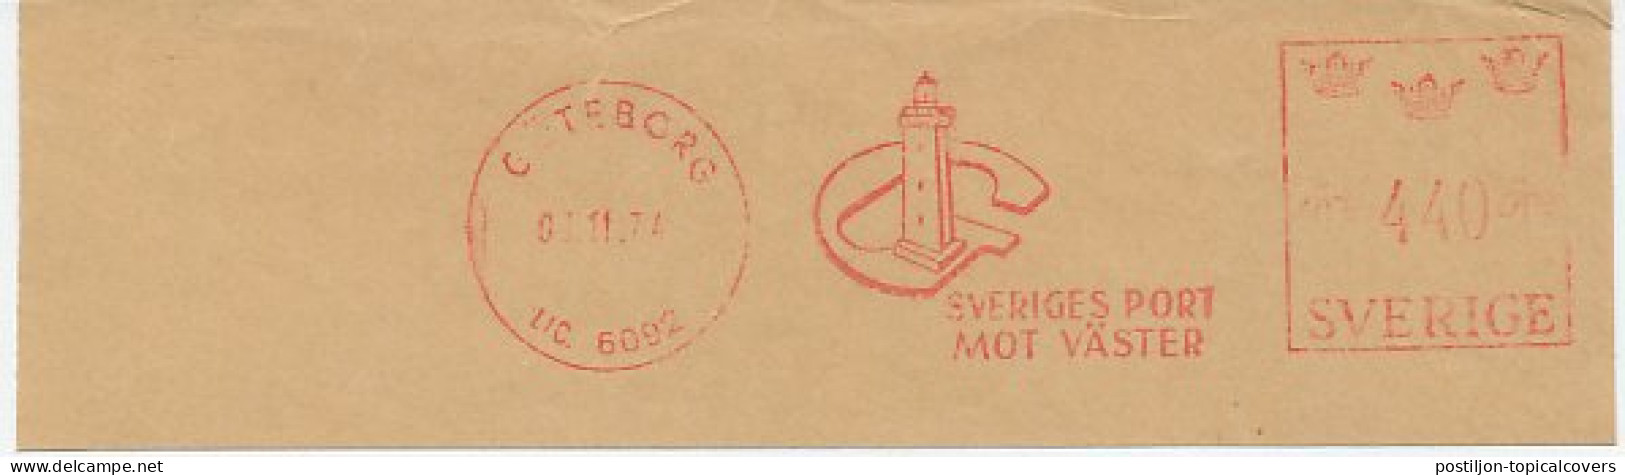 Meter Cut Sweden 1974 Lighthouse - Goteborg - Faros